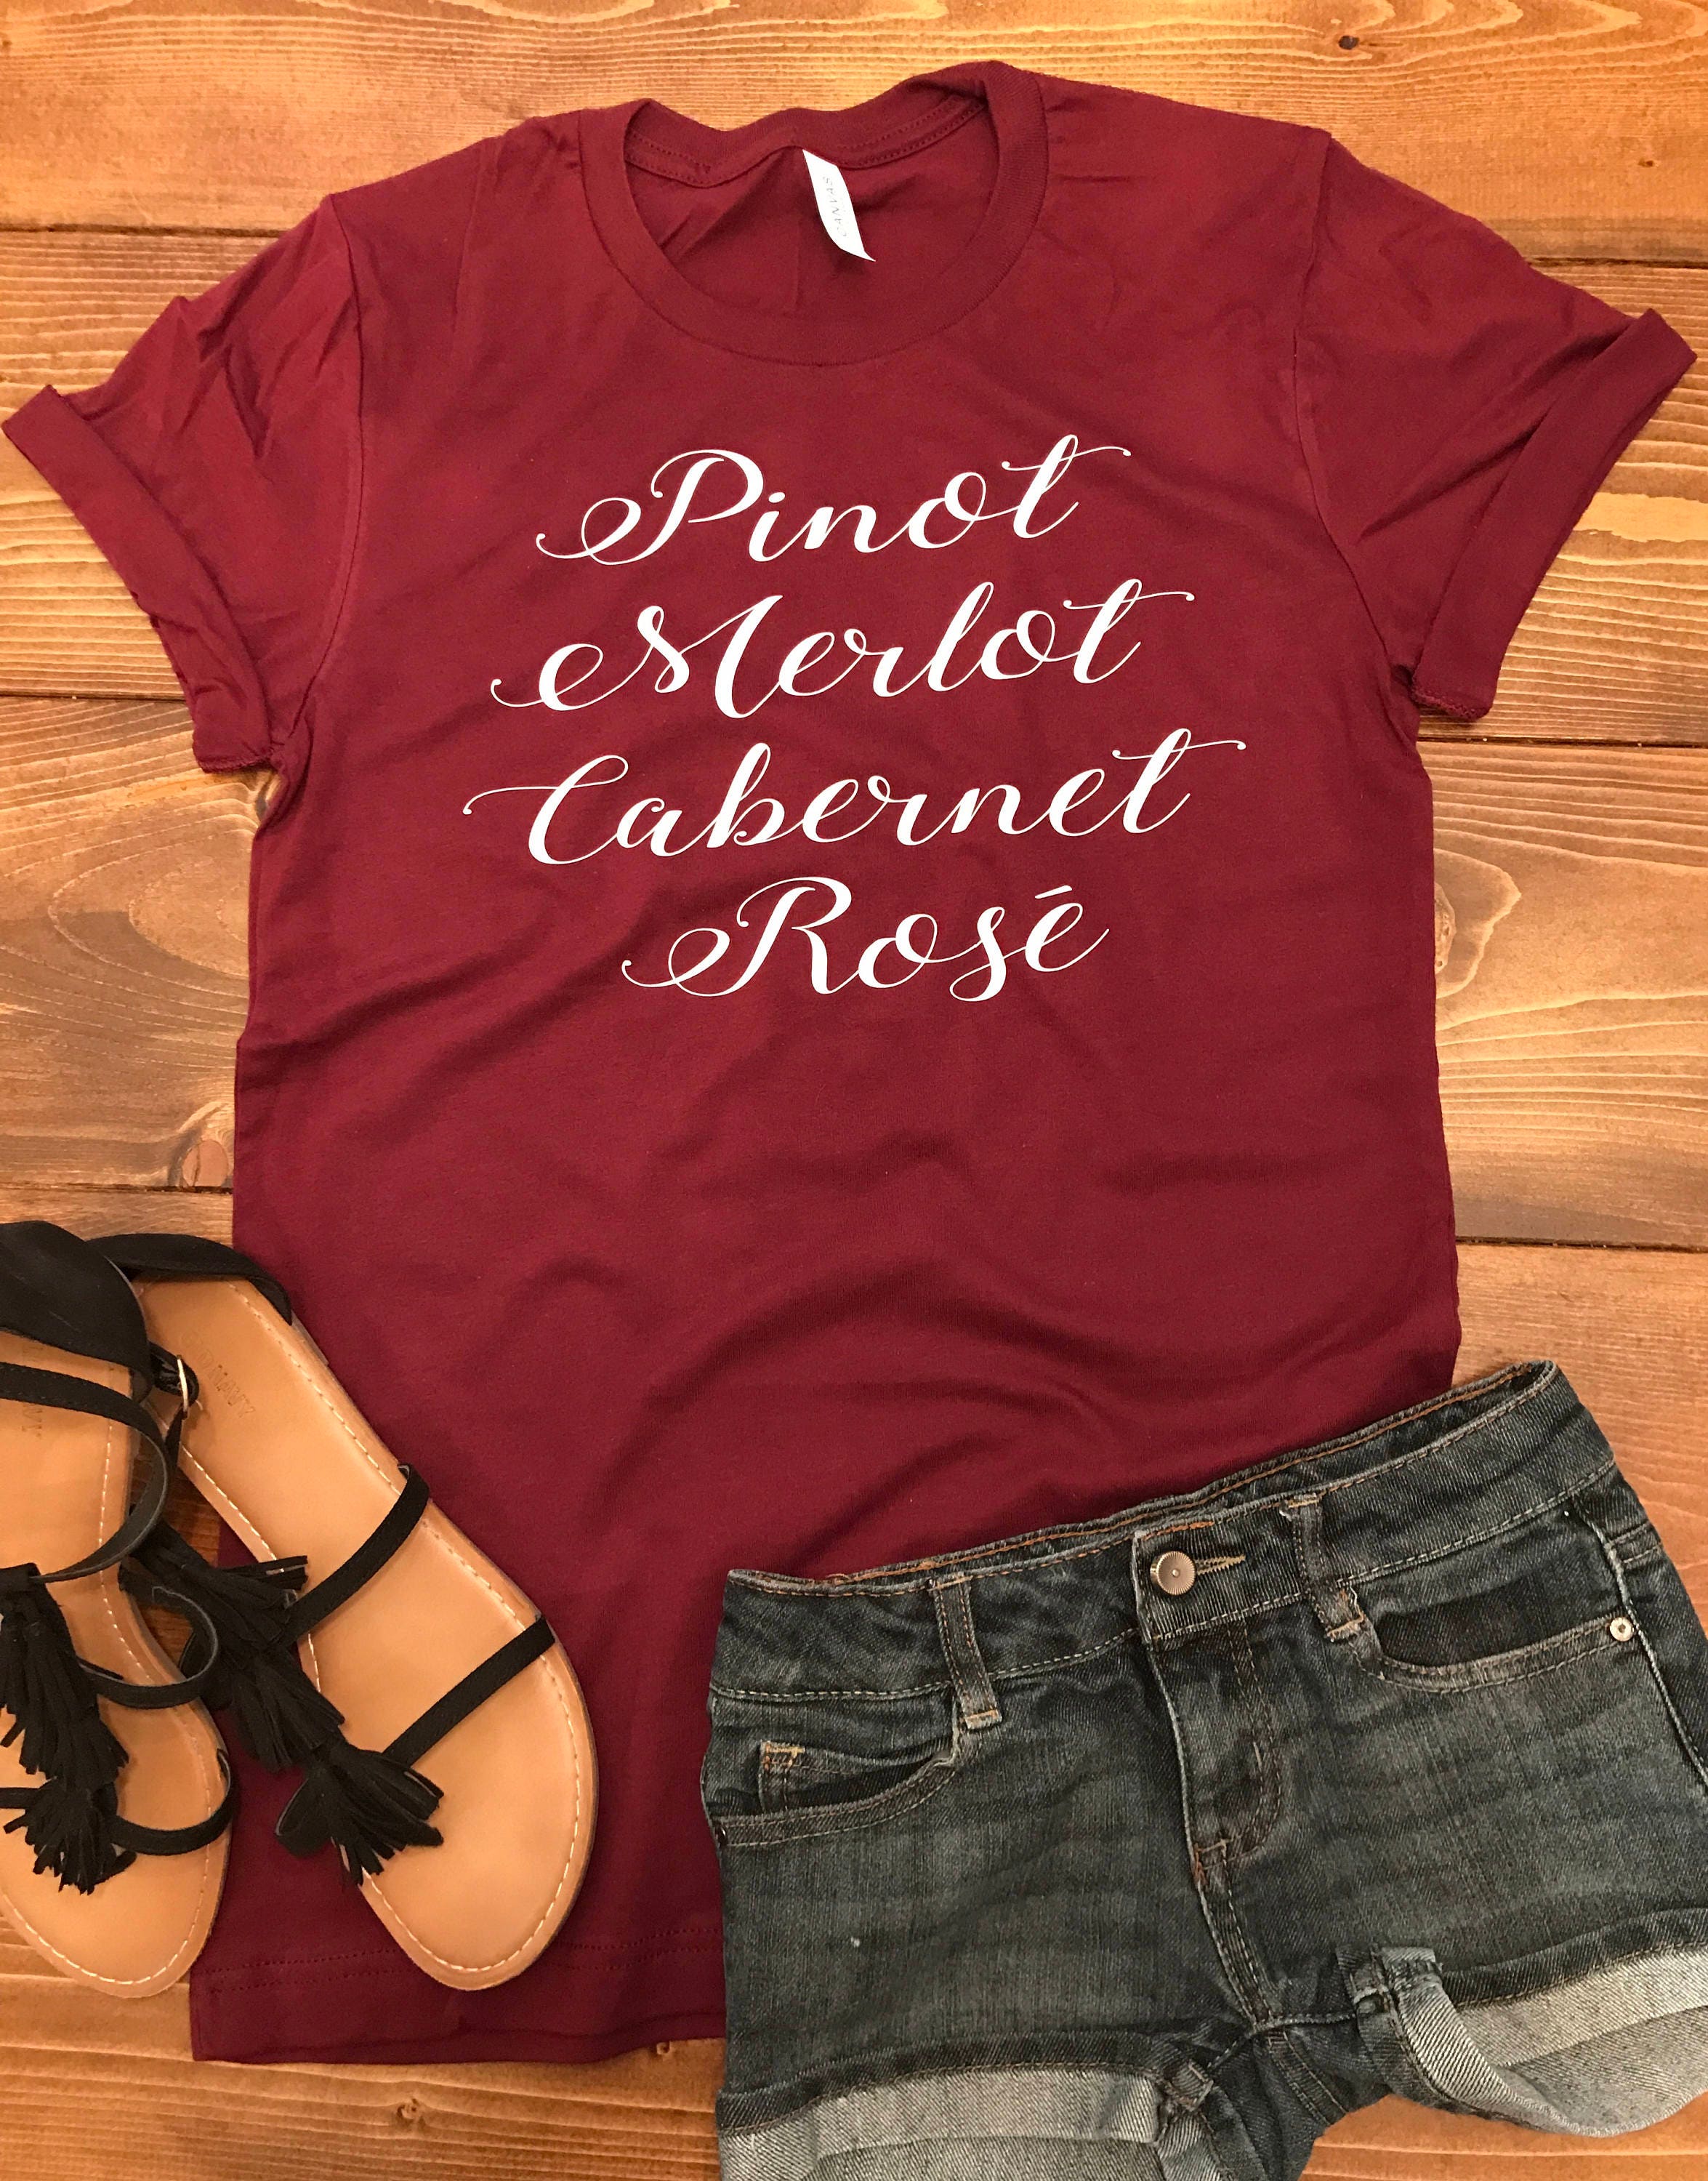 Pinot Merlot Cabernet Rose Wine tee t-shirt woman's tee | Etsy